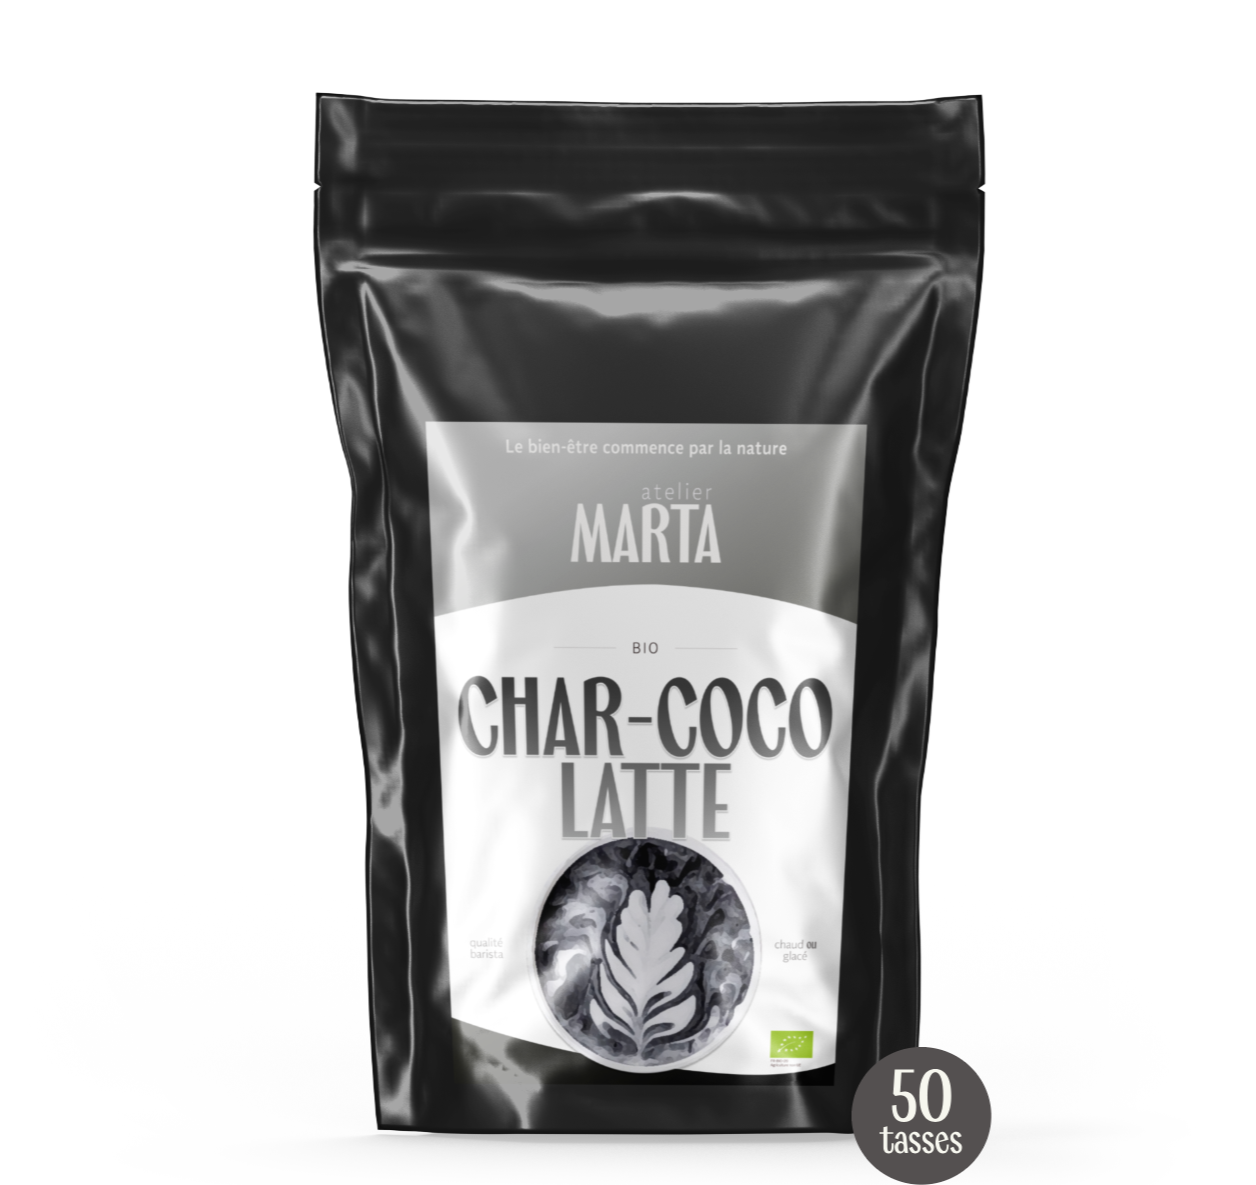 Charcoal latte Atelier Marta 50 tasses